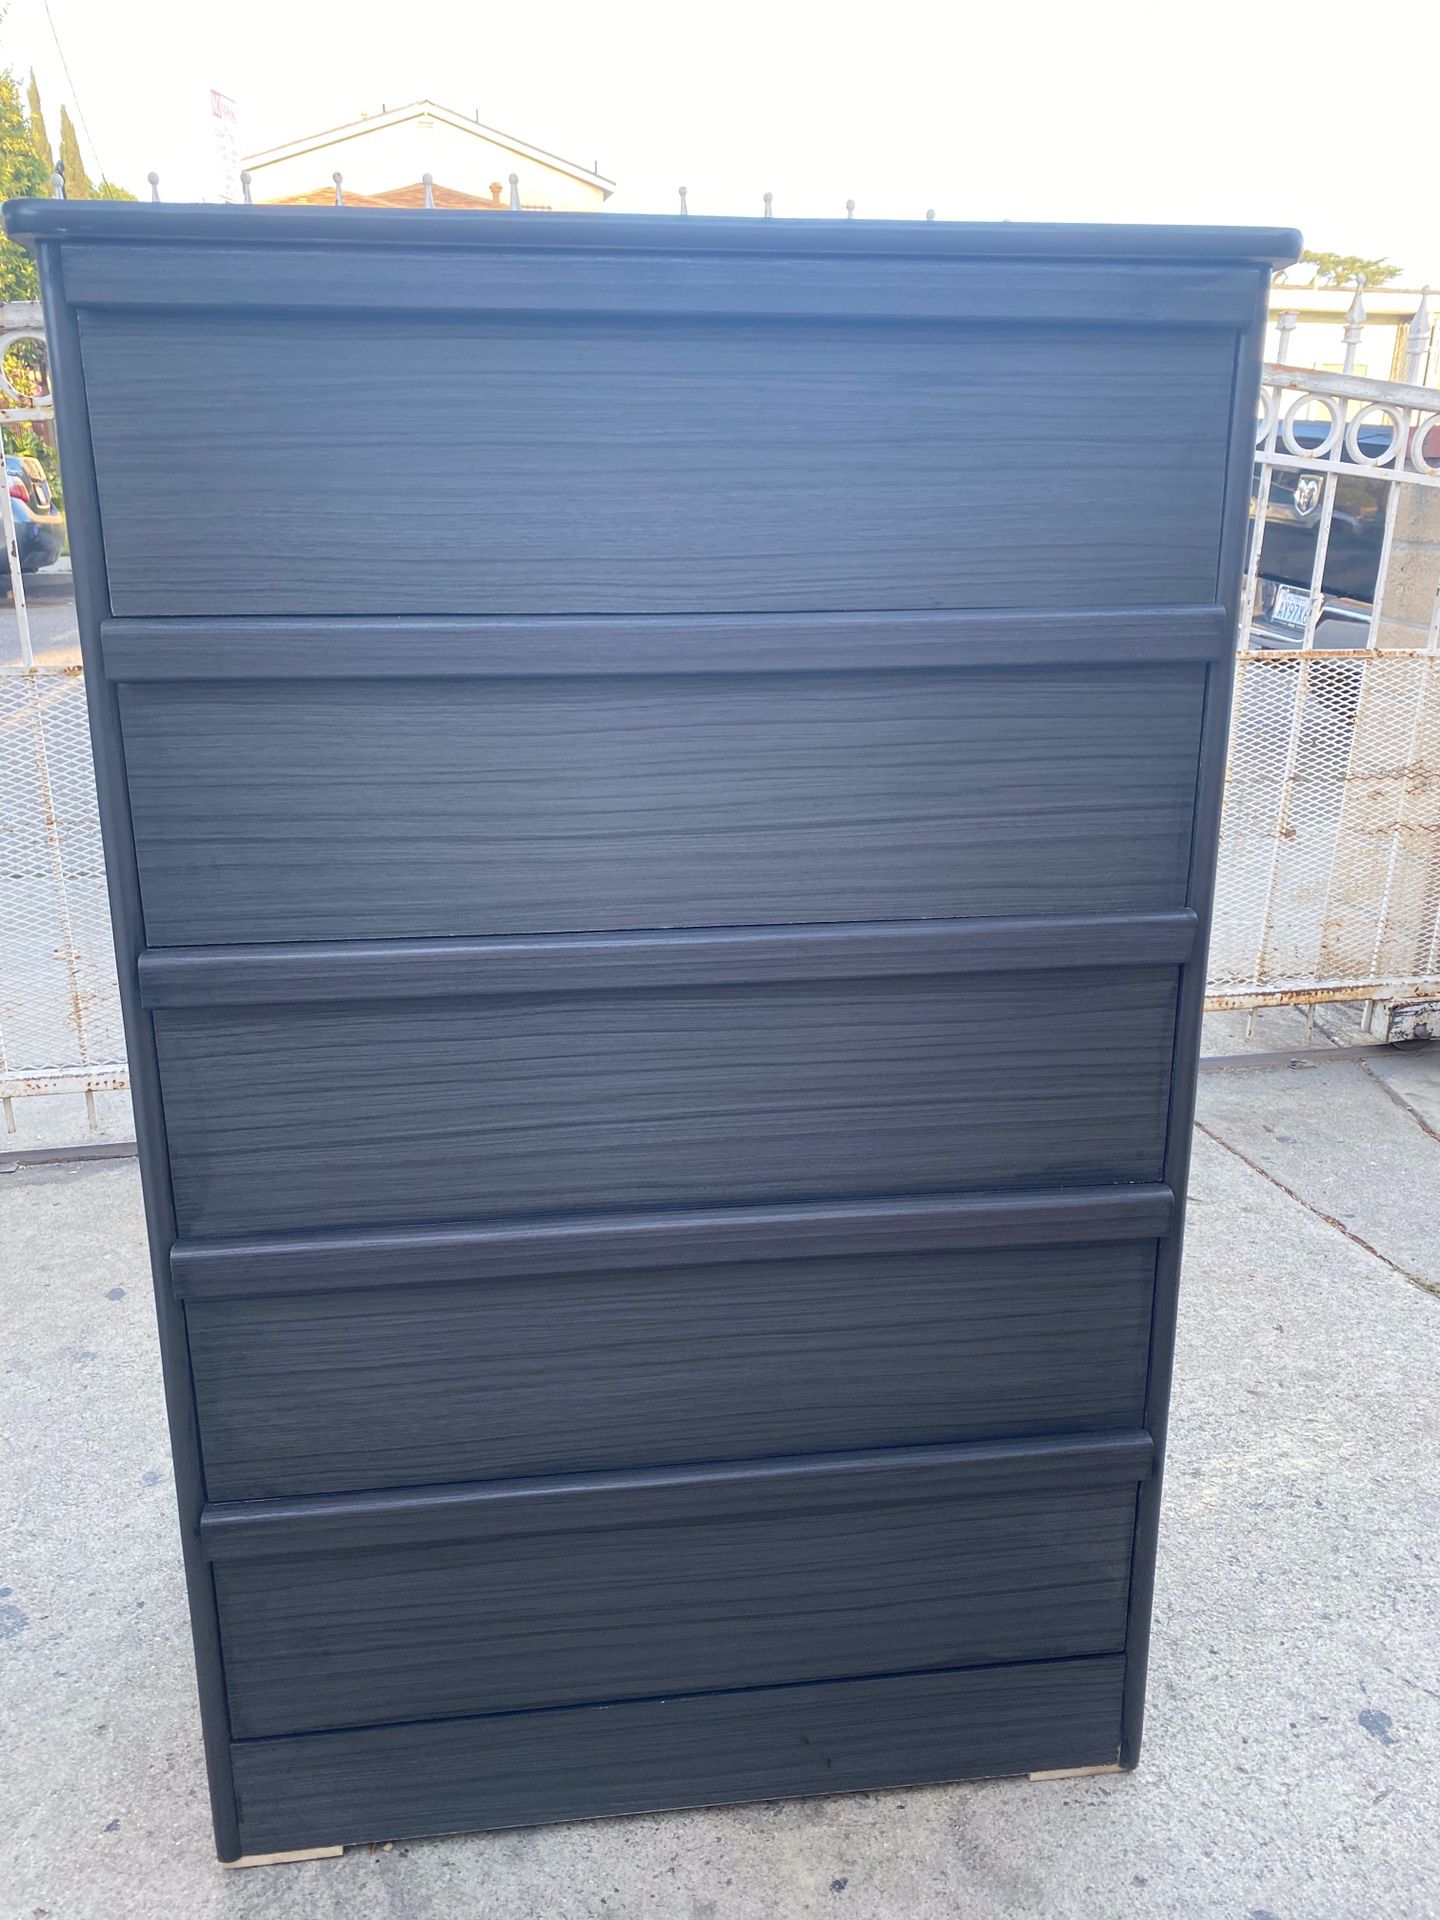 Grey 5 drawer chest $100